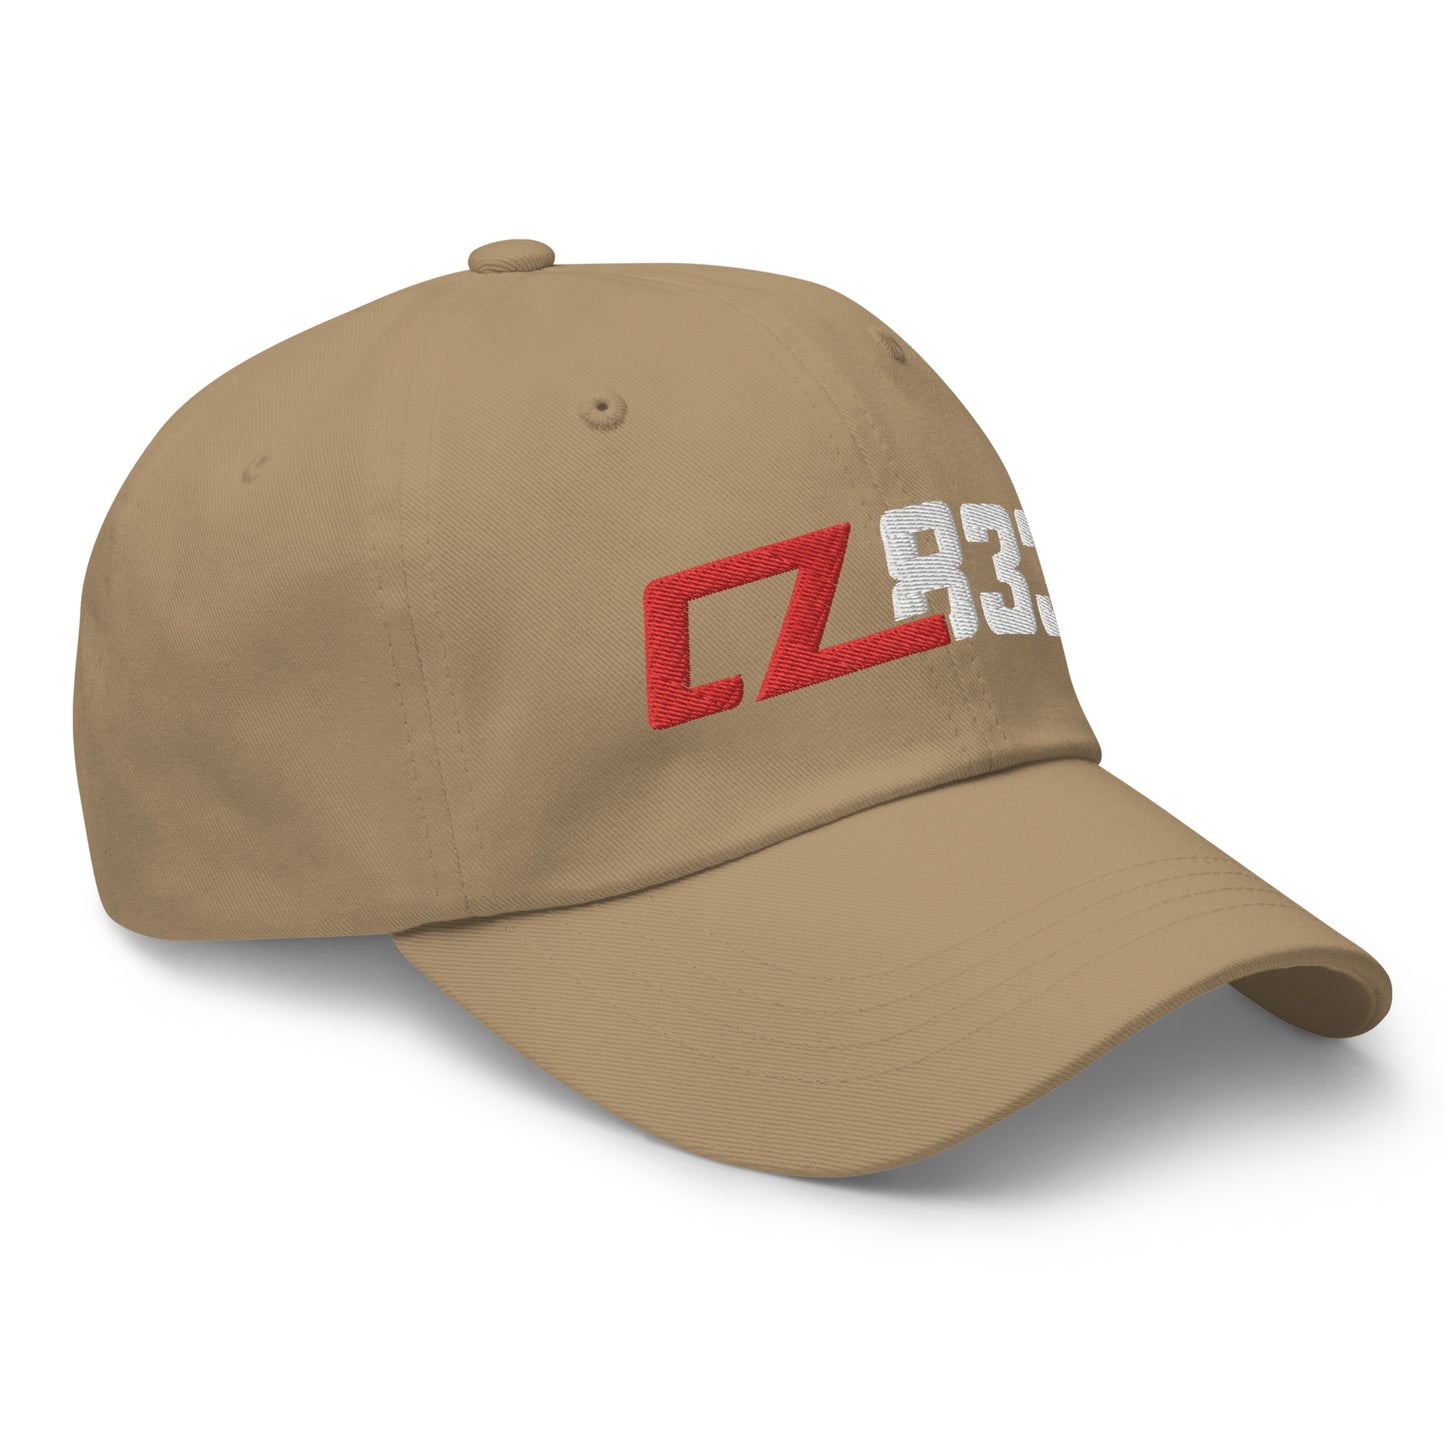 CZ833 Adjustable Cap